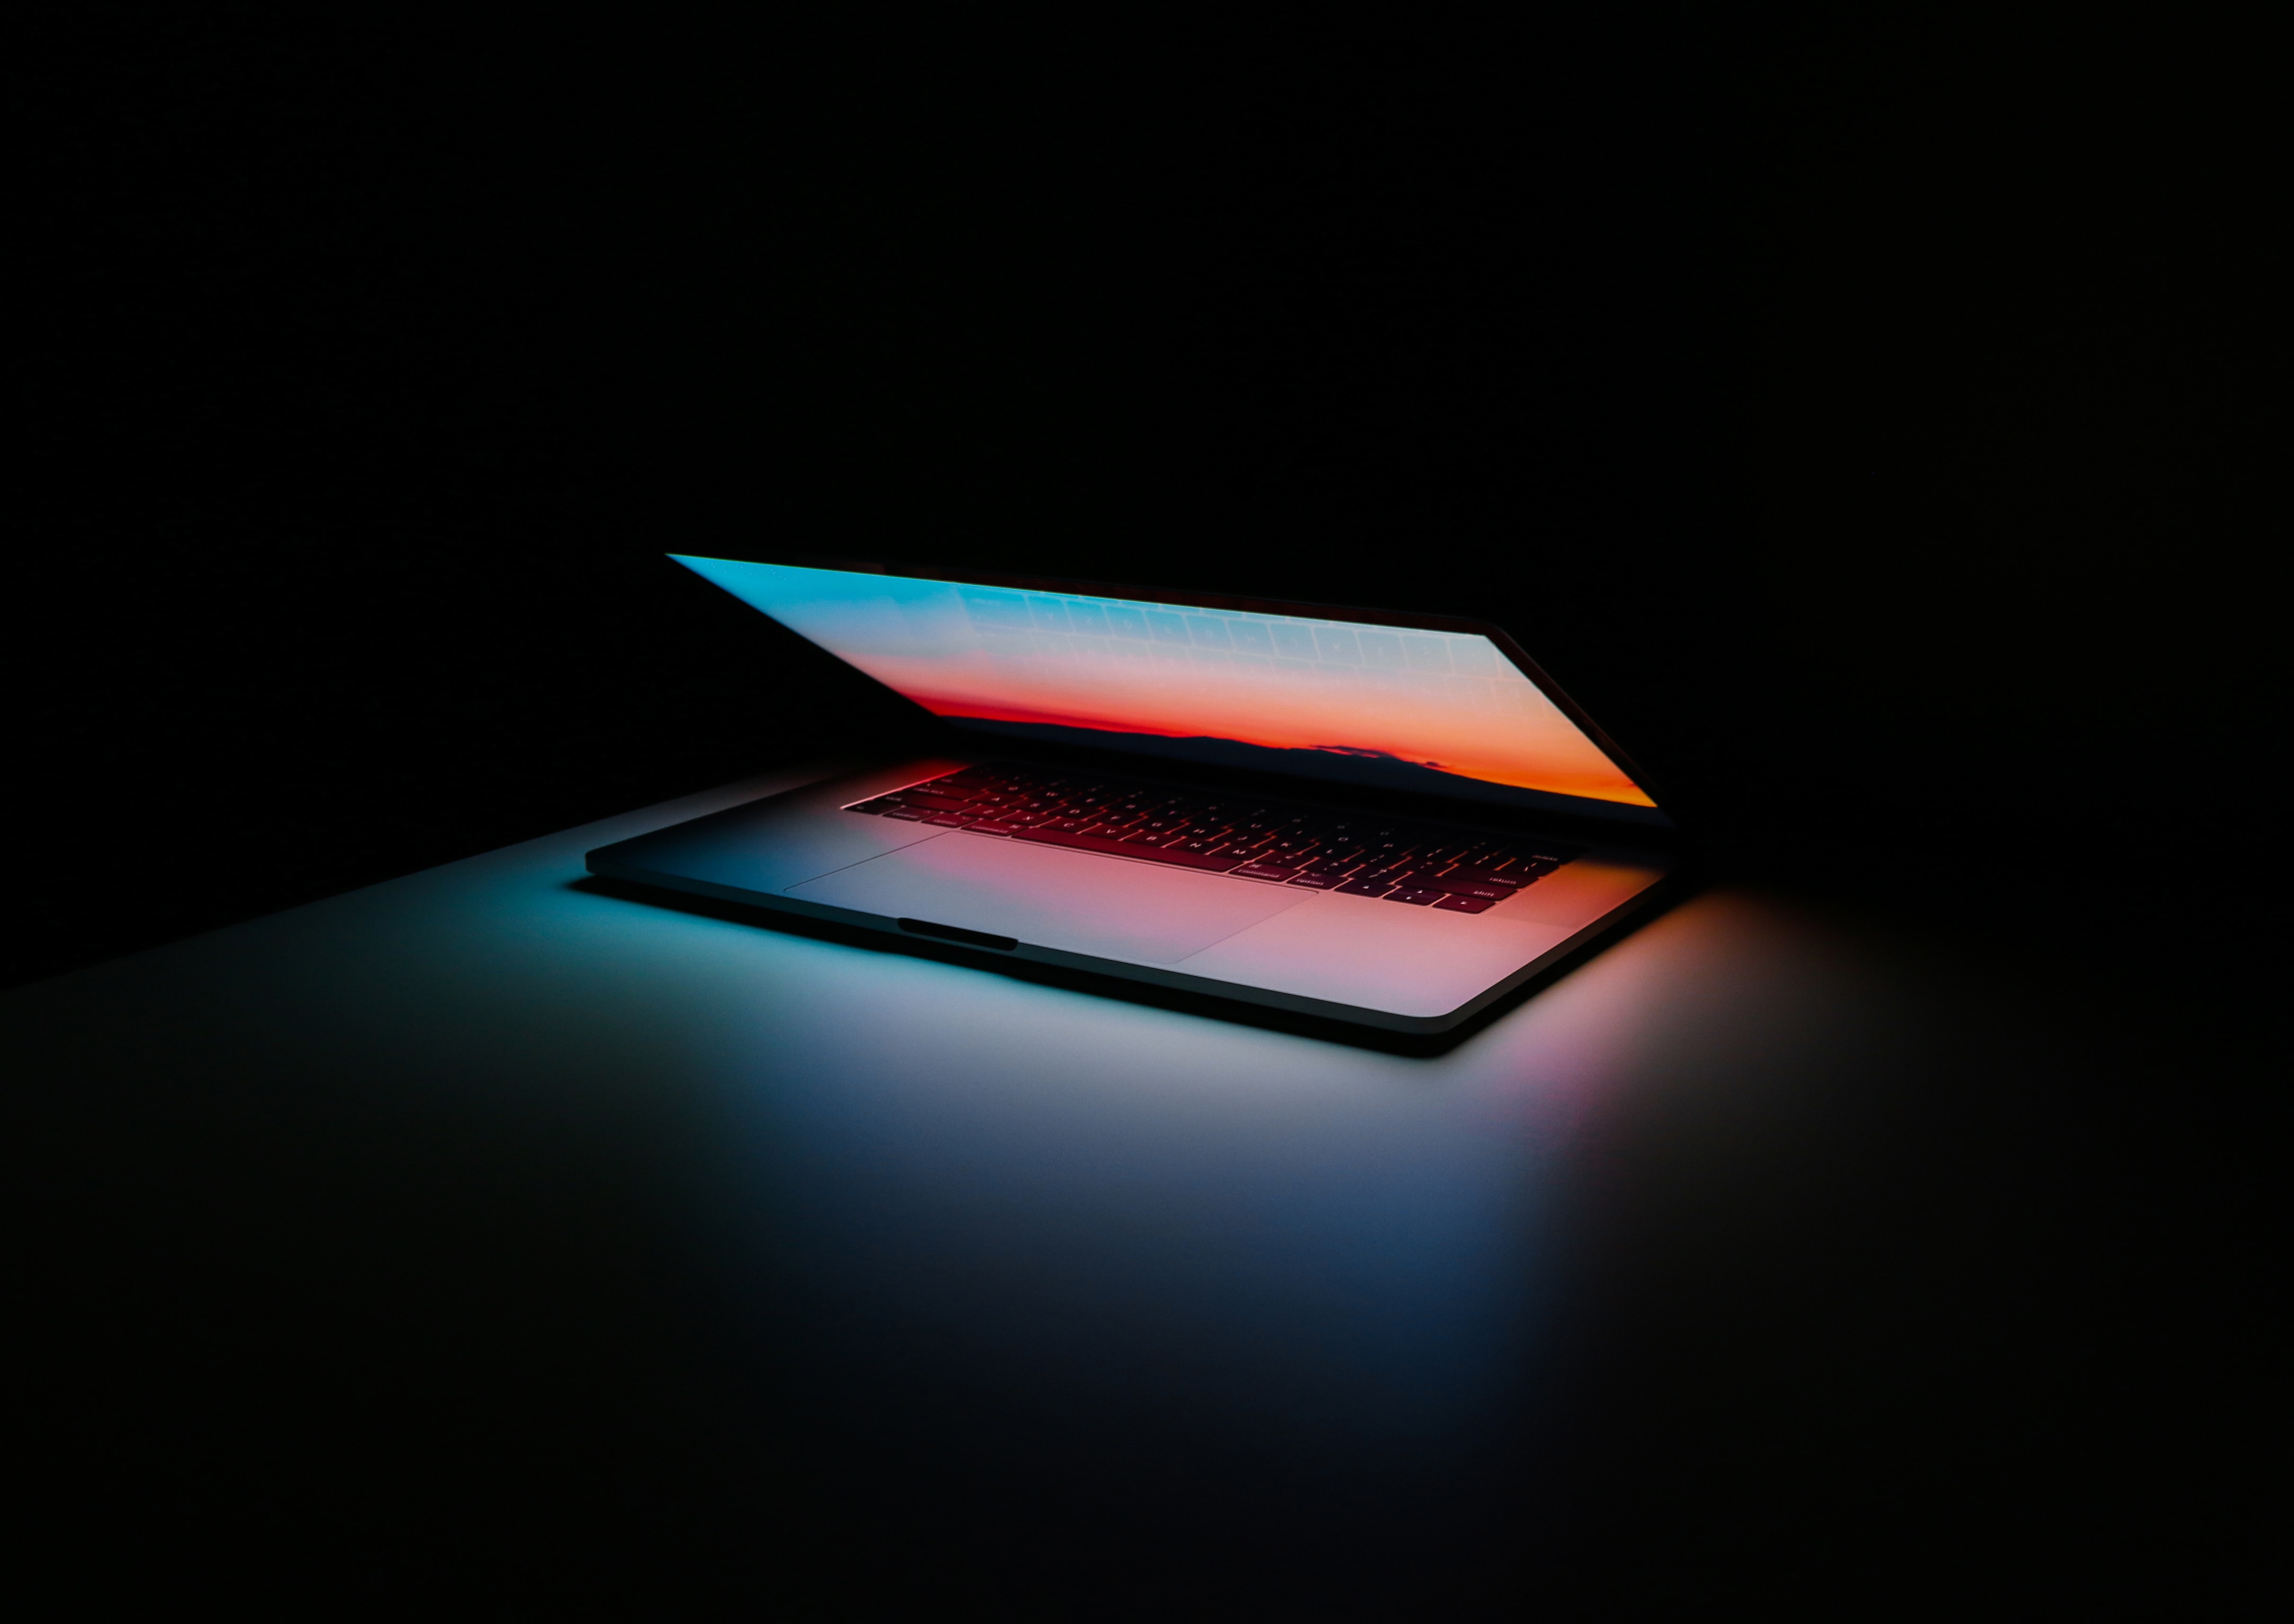 Shadowy photo of a grey MacBook Air in the dark